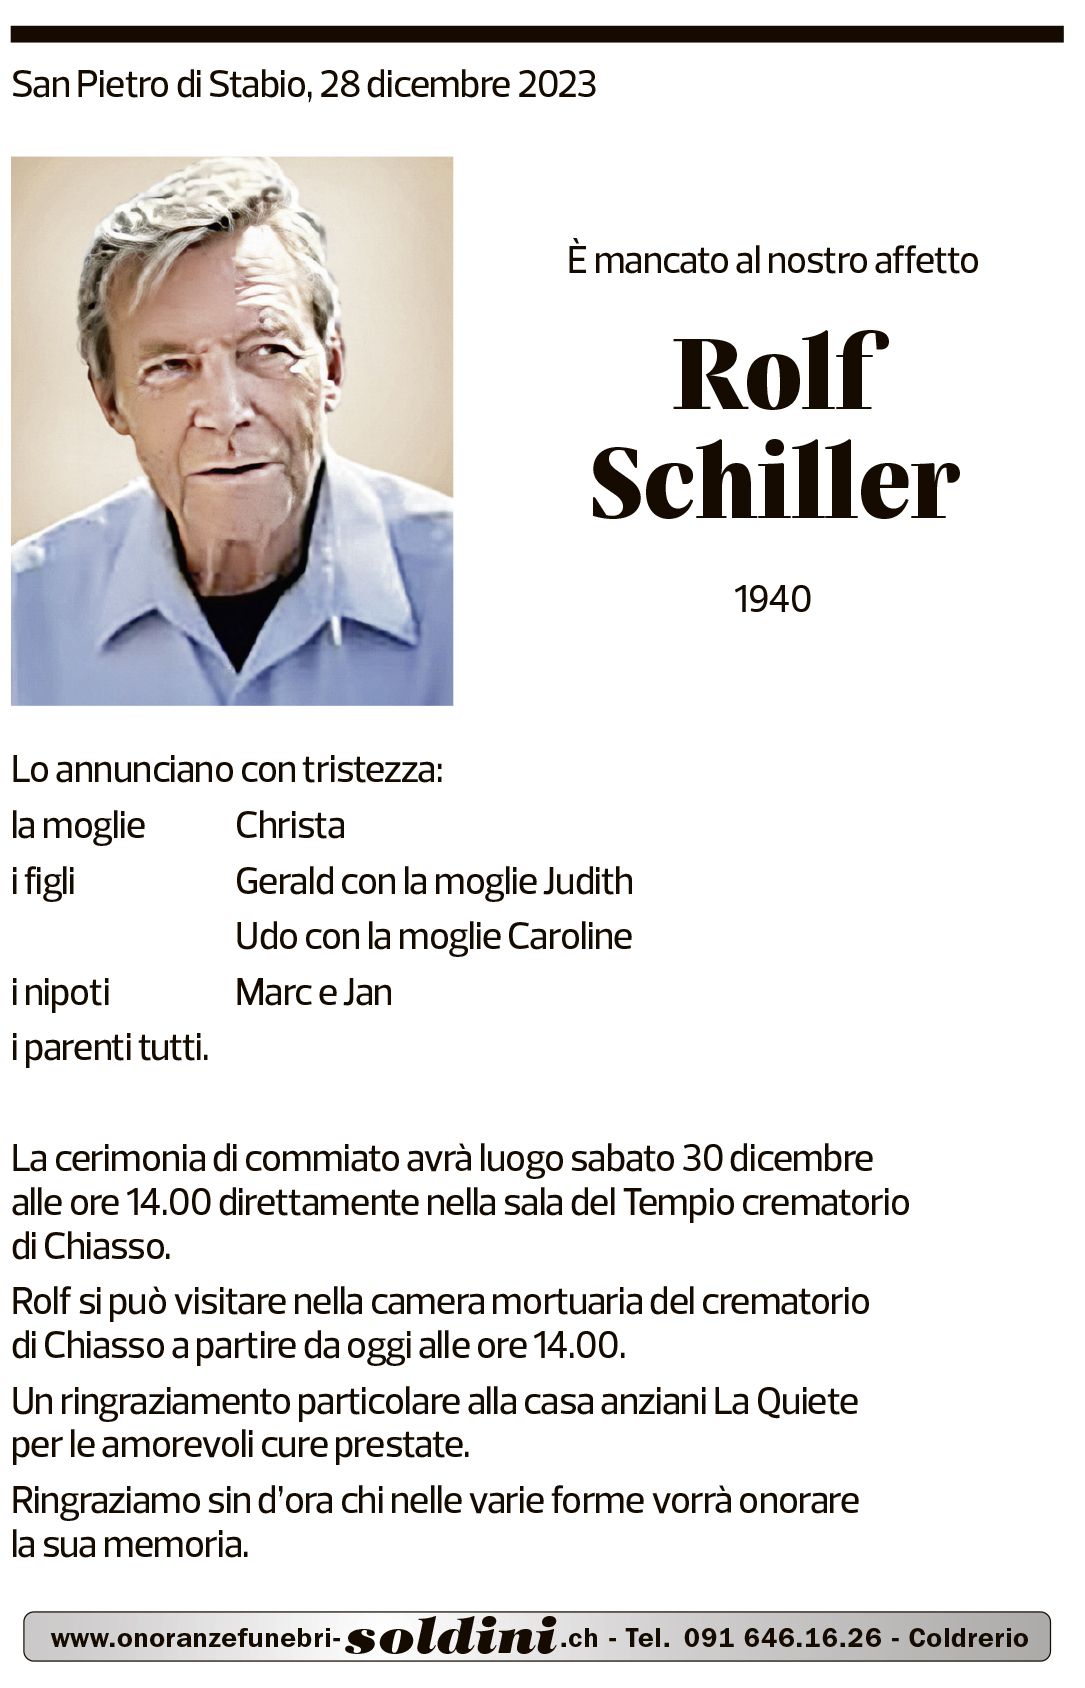 Annuncio funebre Rolf Schiller